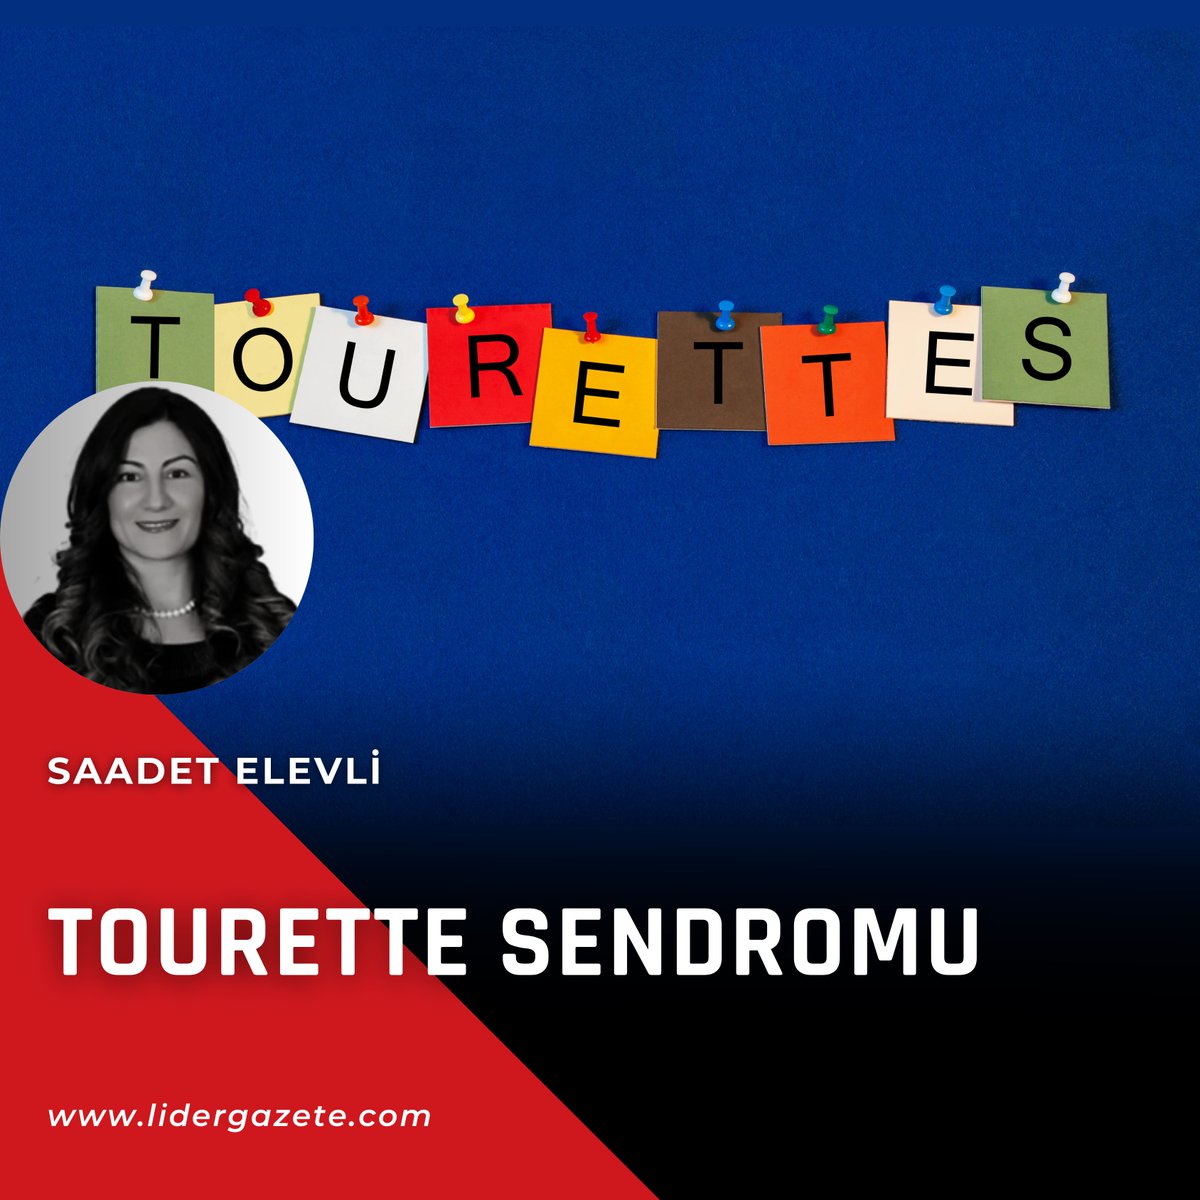 TOURETTE SENDROMU

Detaylar lidergazete.com/tourette-sendr…